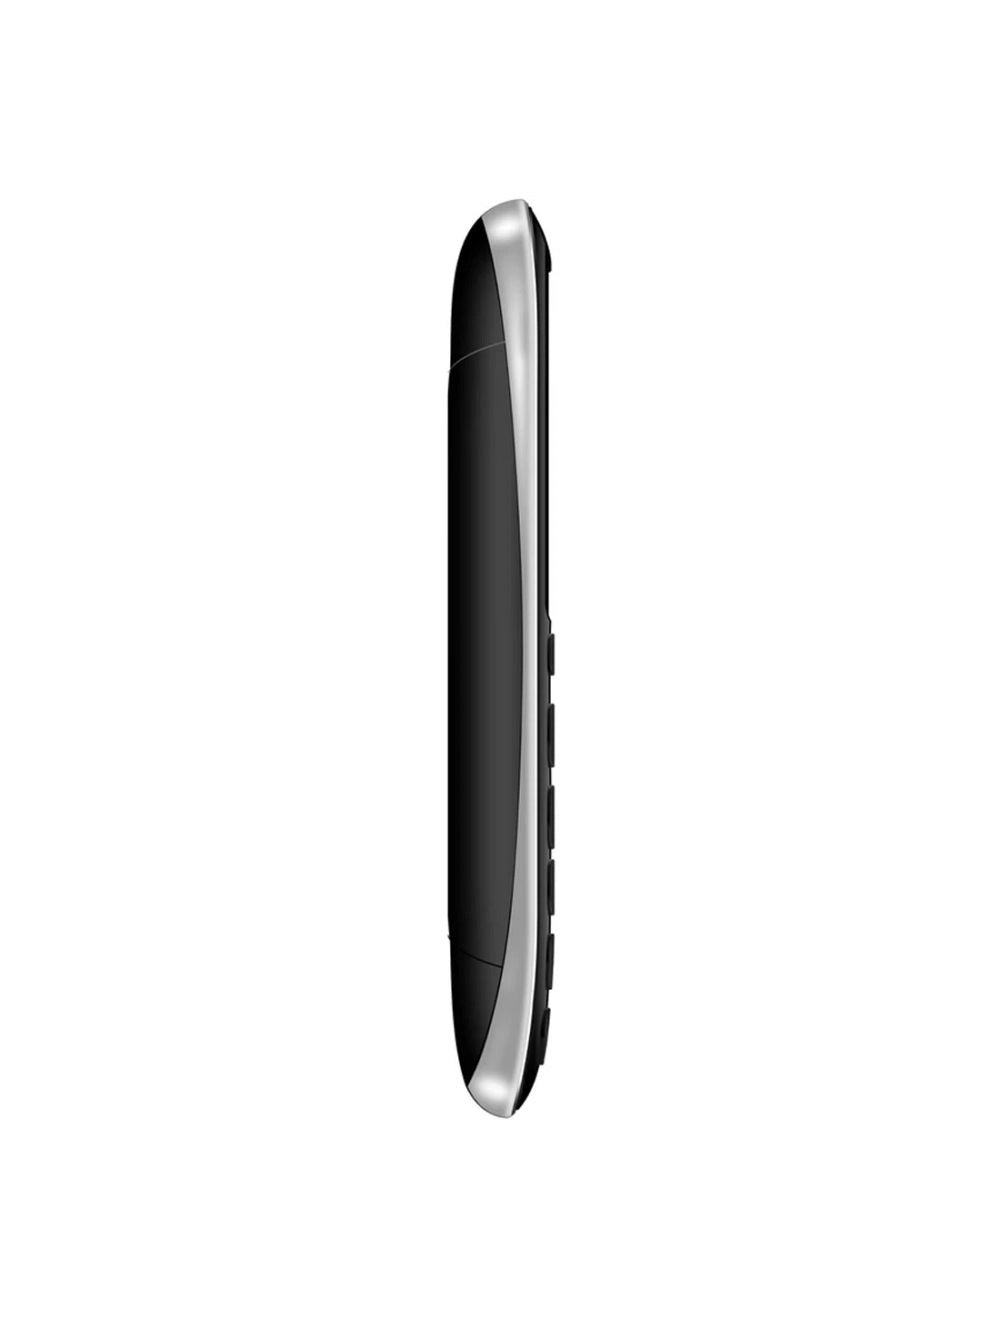 Opel Mobile BigButton X (4G/LTE, Keypad) - Black